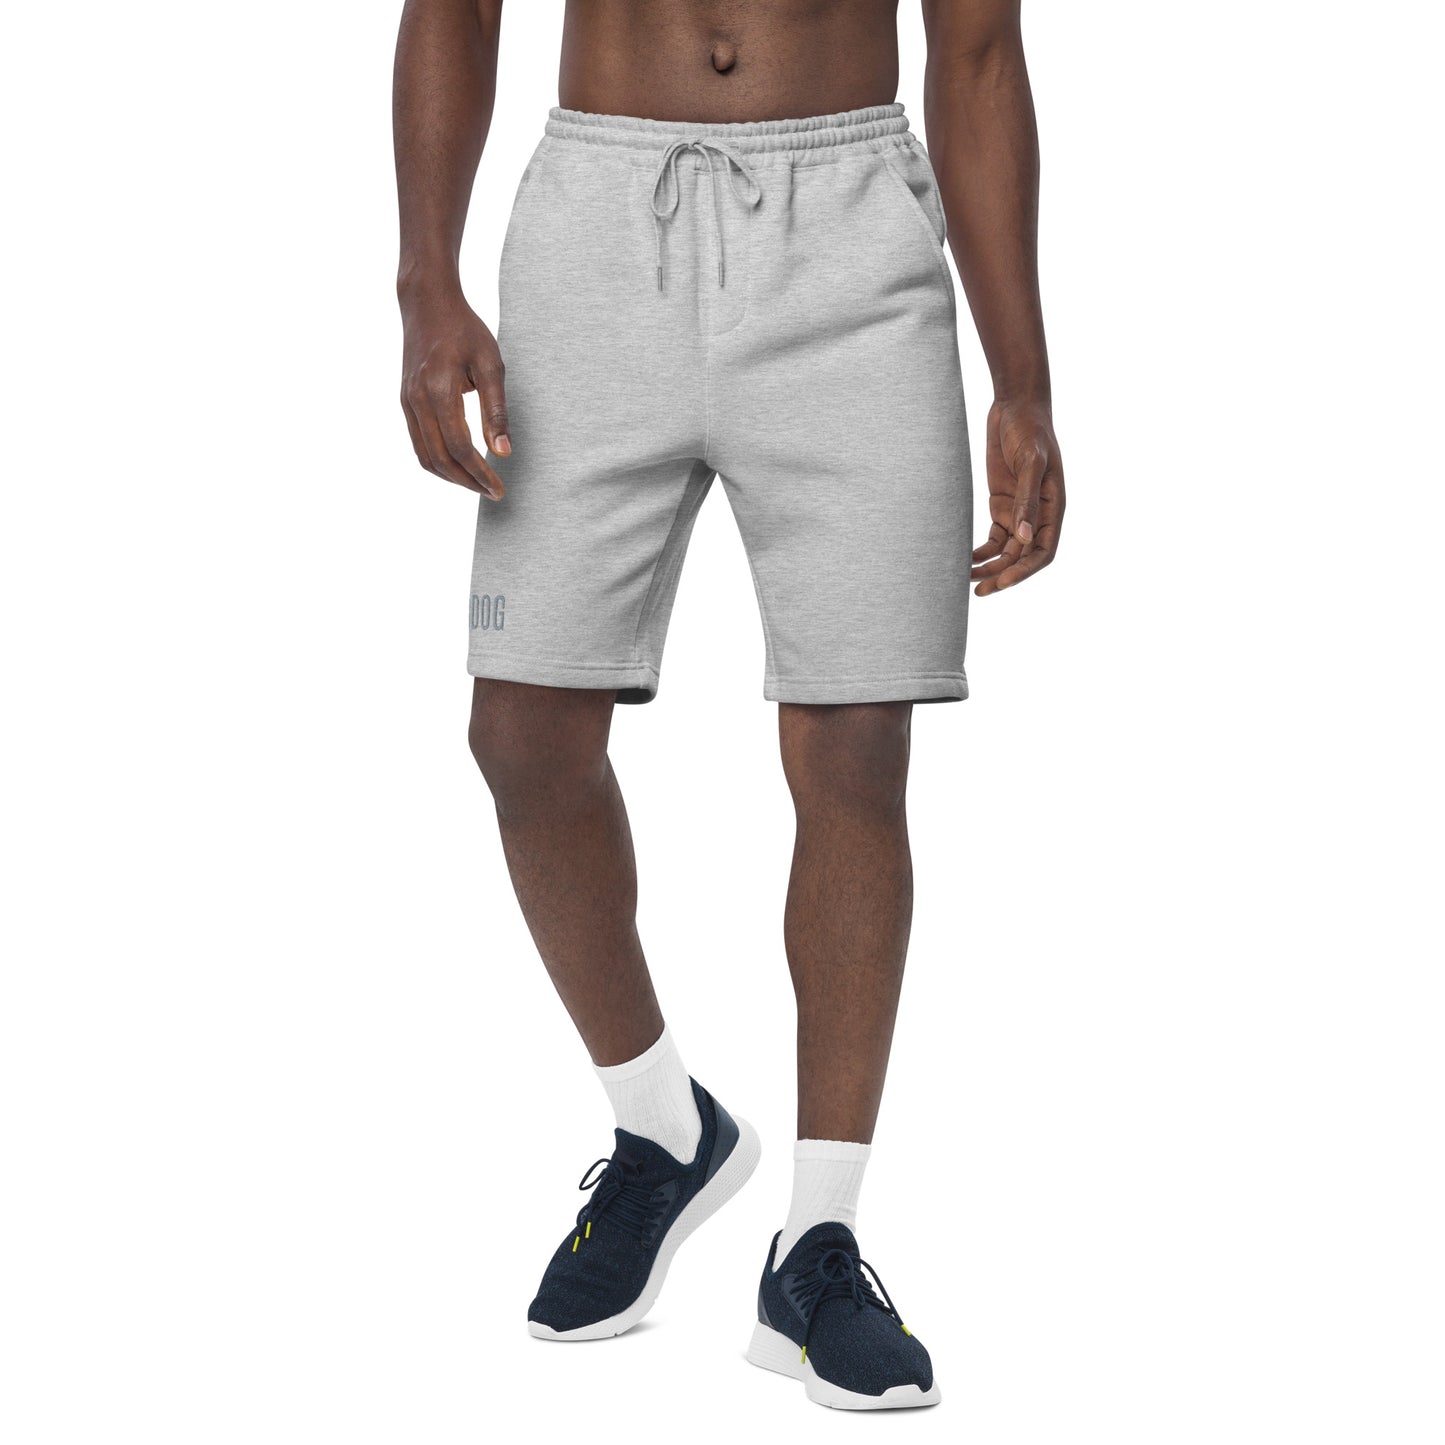 Men's WARDOG fleece shorts